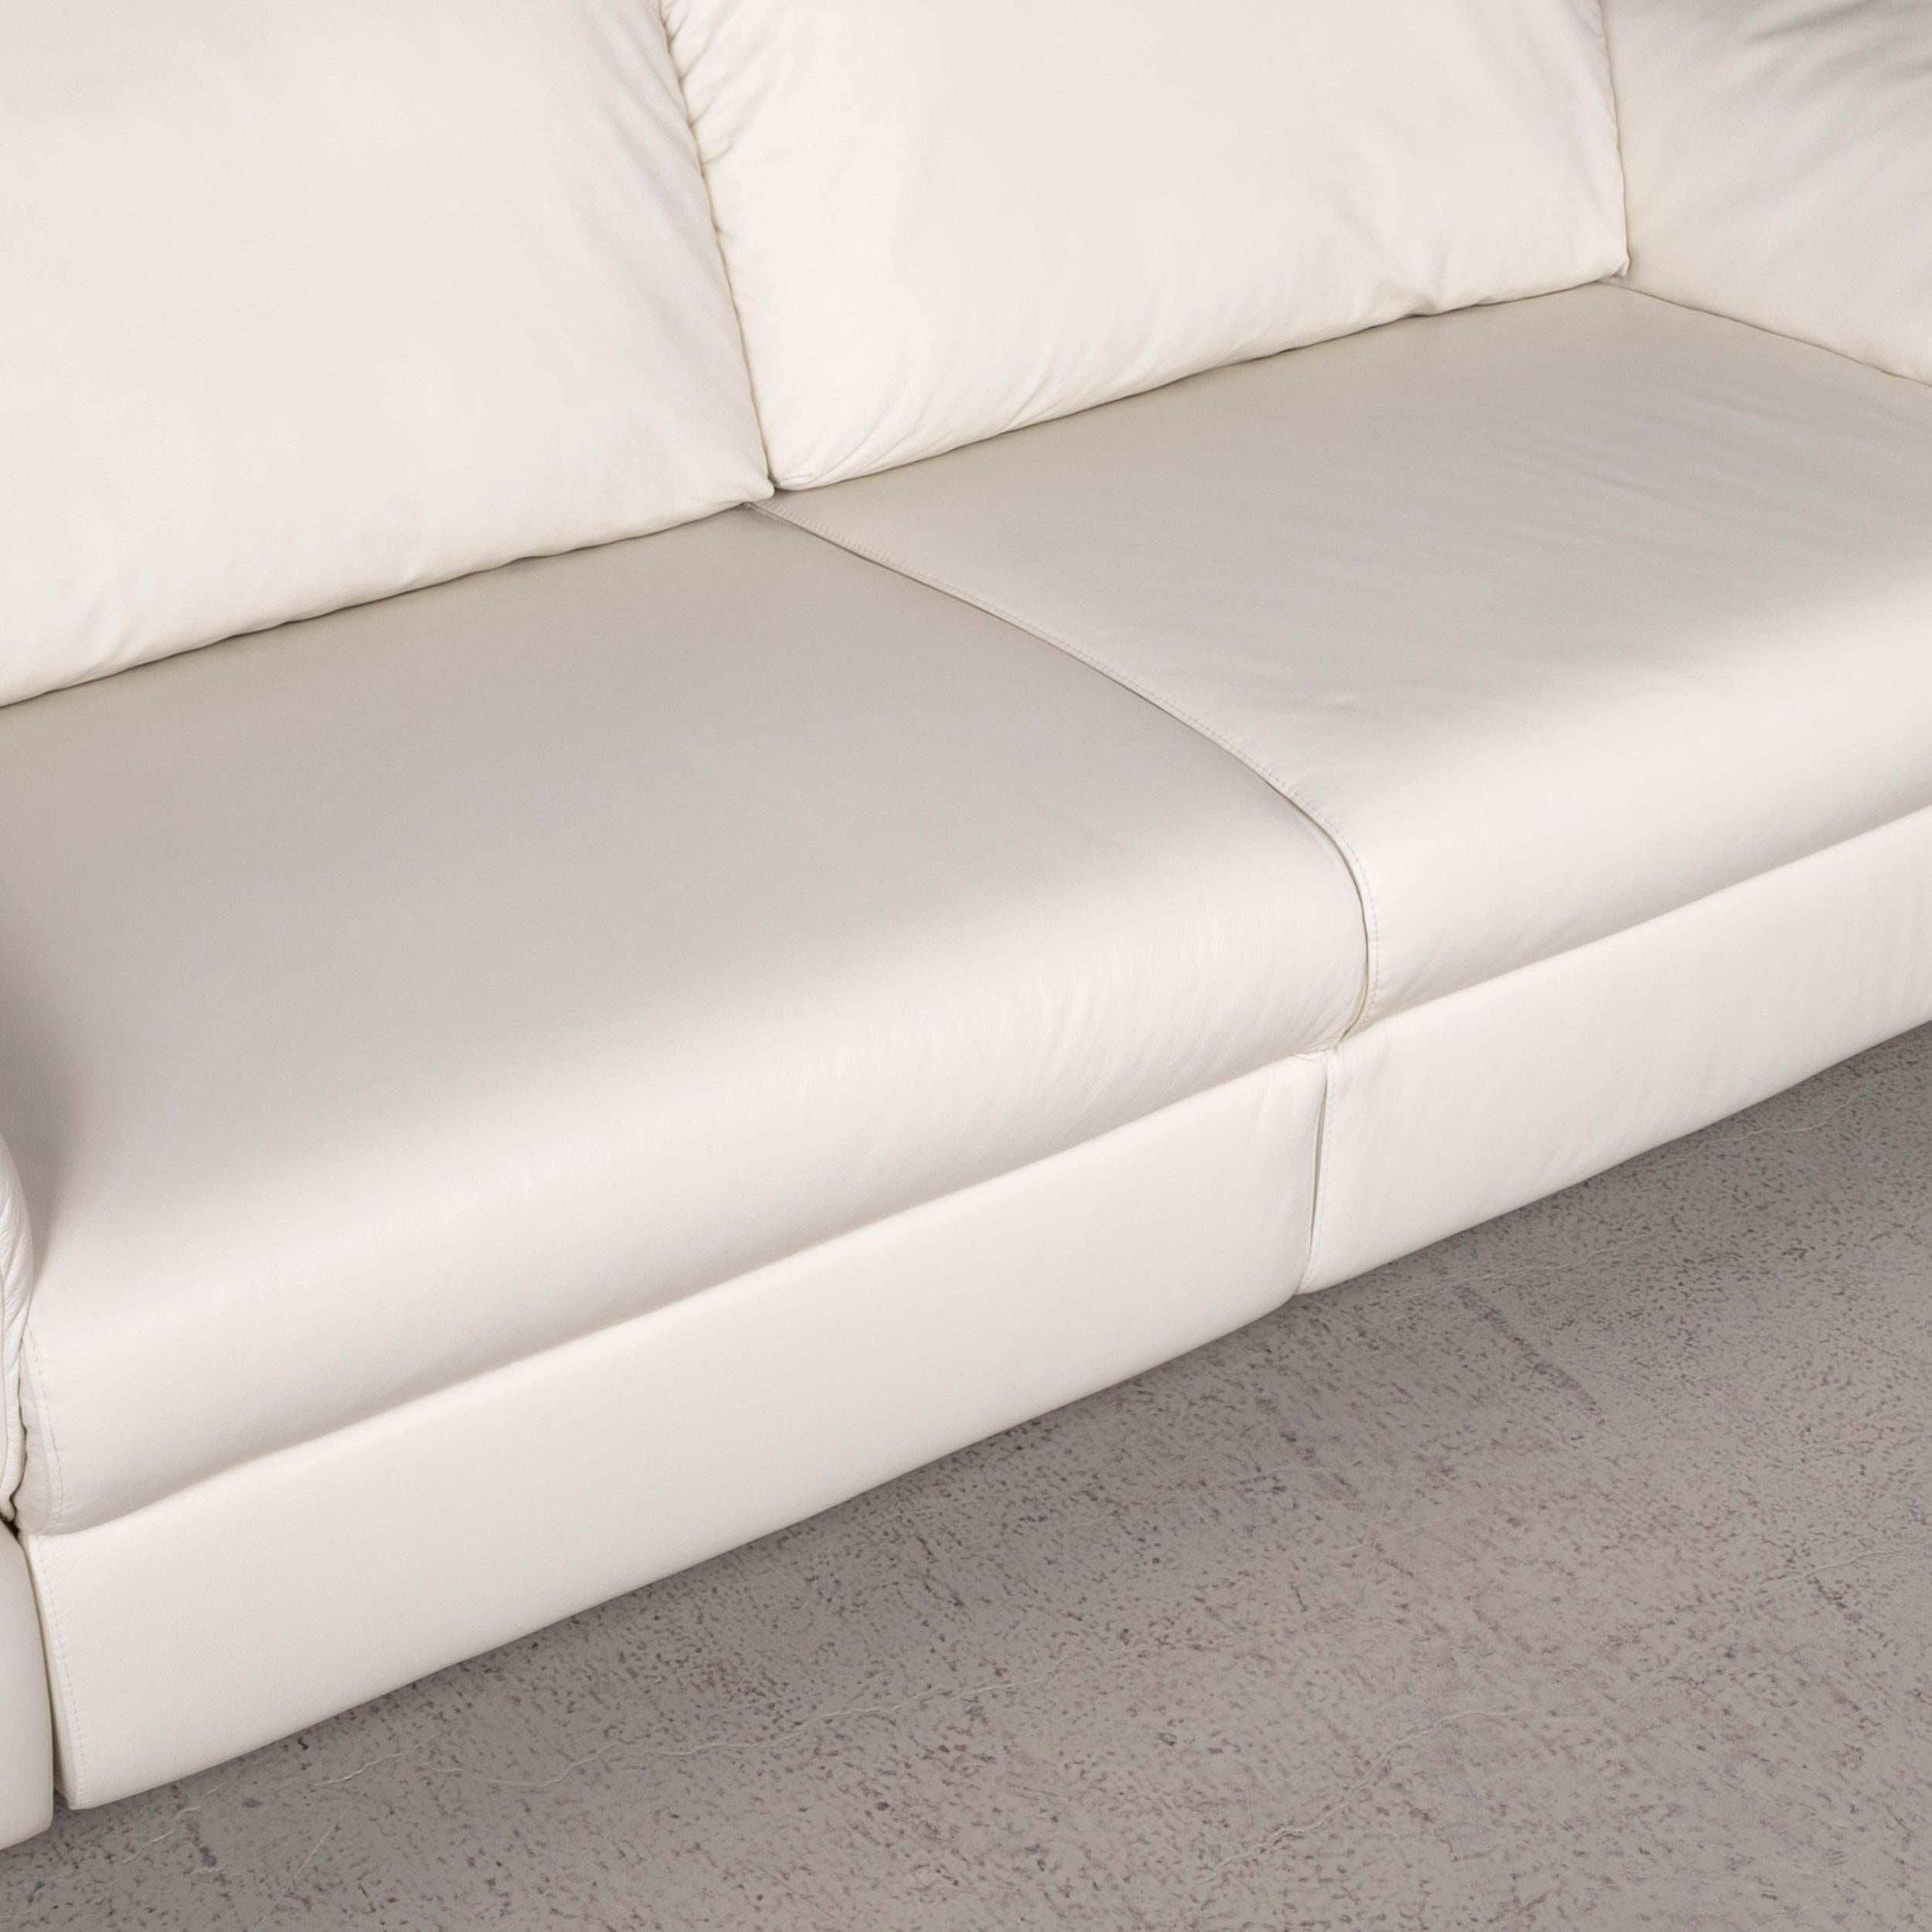 Willi Schillig Sinaatra Designer Leather Sofa White Genuine Leather Two-Seat In Excellent Condition For Sale In Cologne, DE